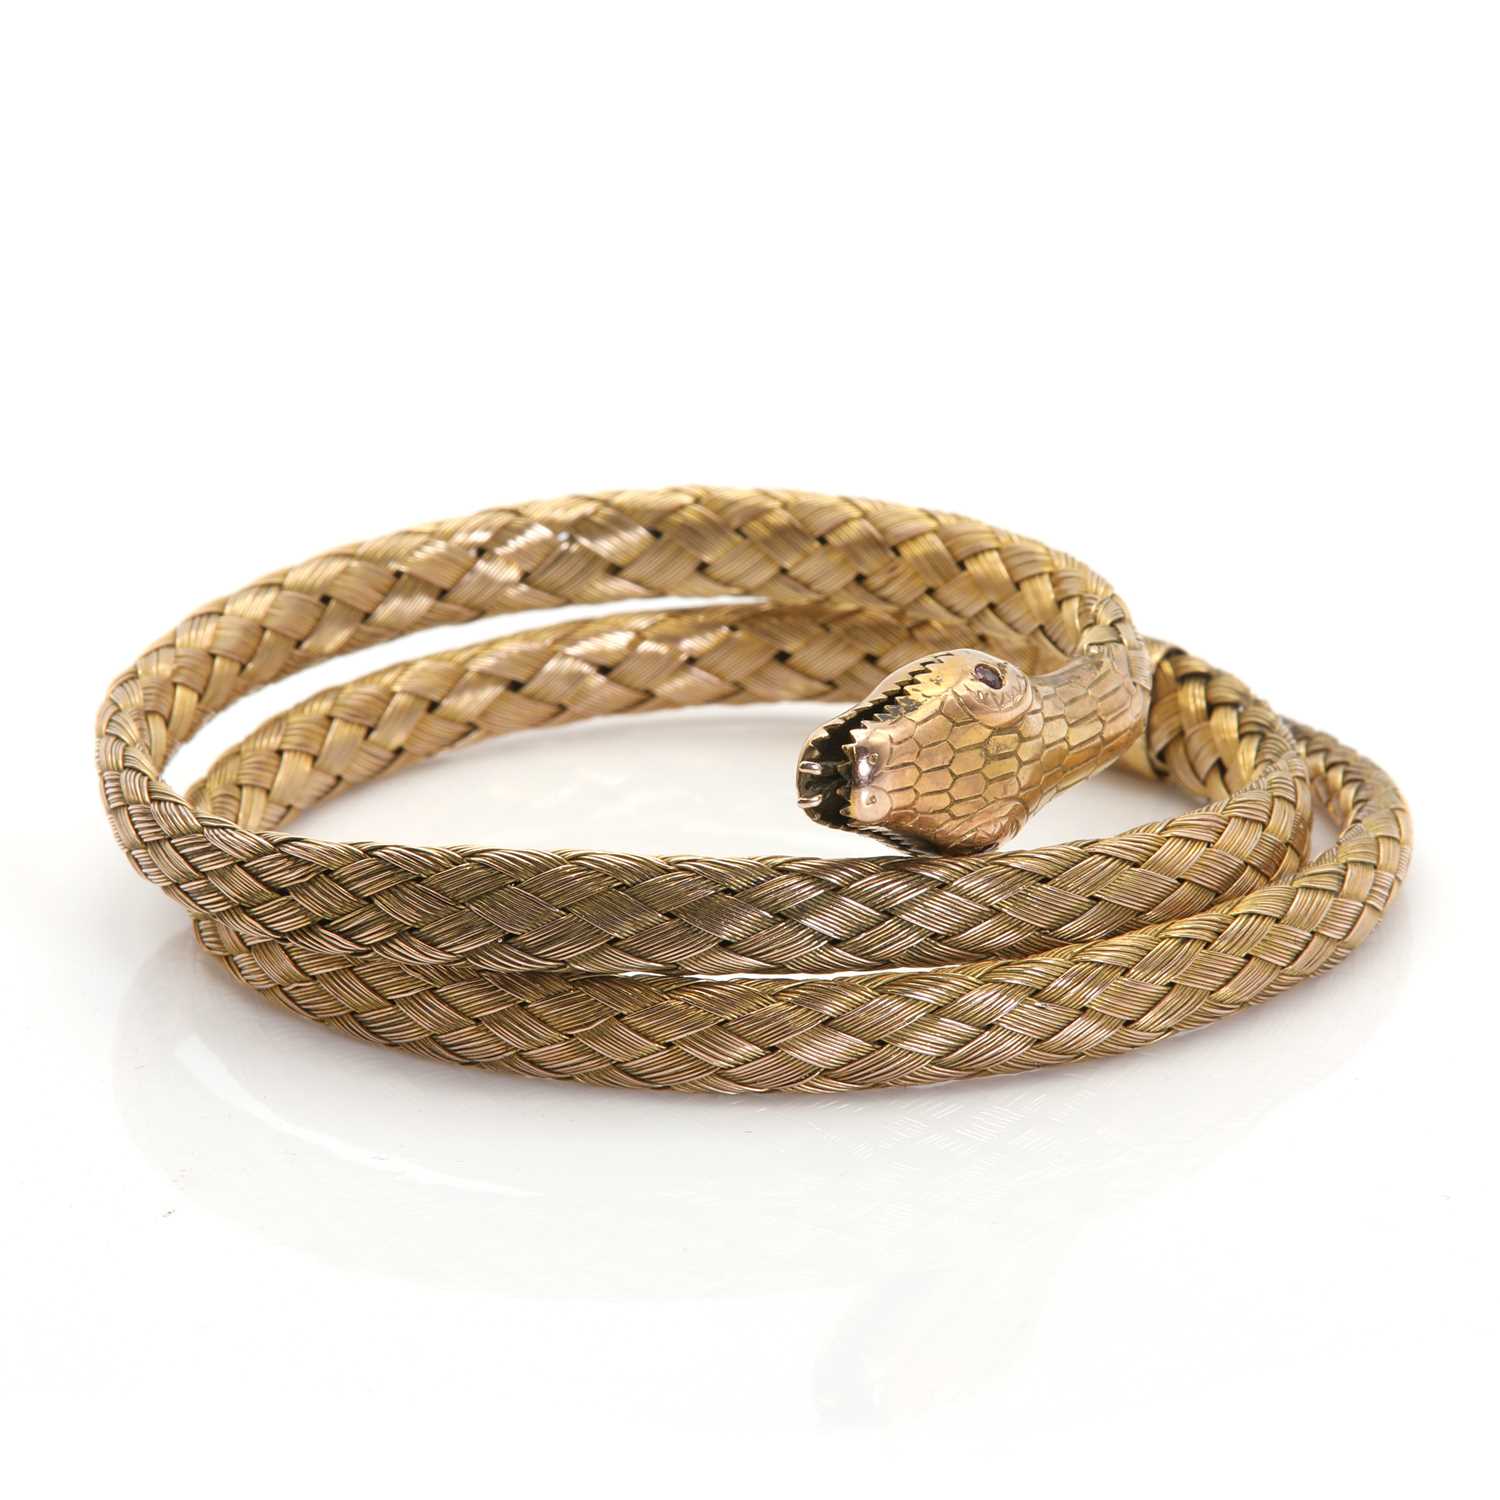 A gold coiled snake flexible bangle,